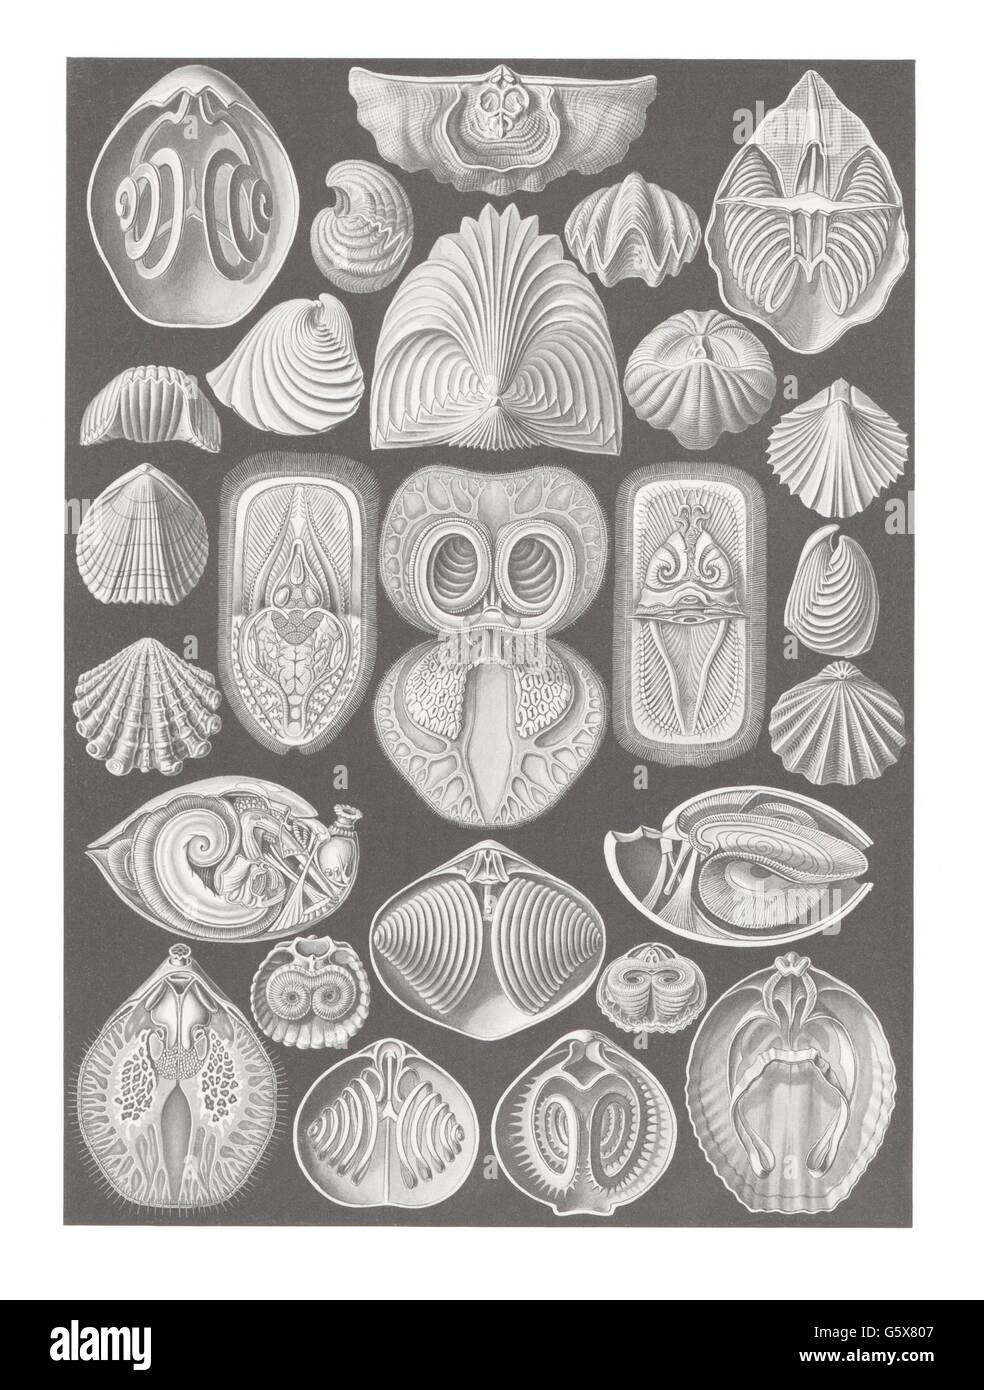 zoologie / Tiere, Brachiopoden (Brachiopoda), Farblithographie, aus: Ernst Haeckel, 'Kunstformen der Natur', Leipzig - Wien, 1899 - 1904, Additional-Rights-Clearences-not available Stockfoto